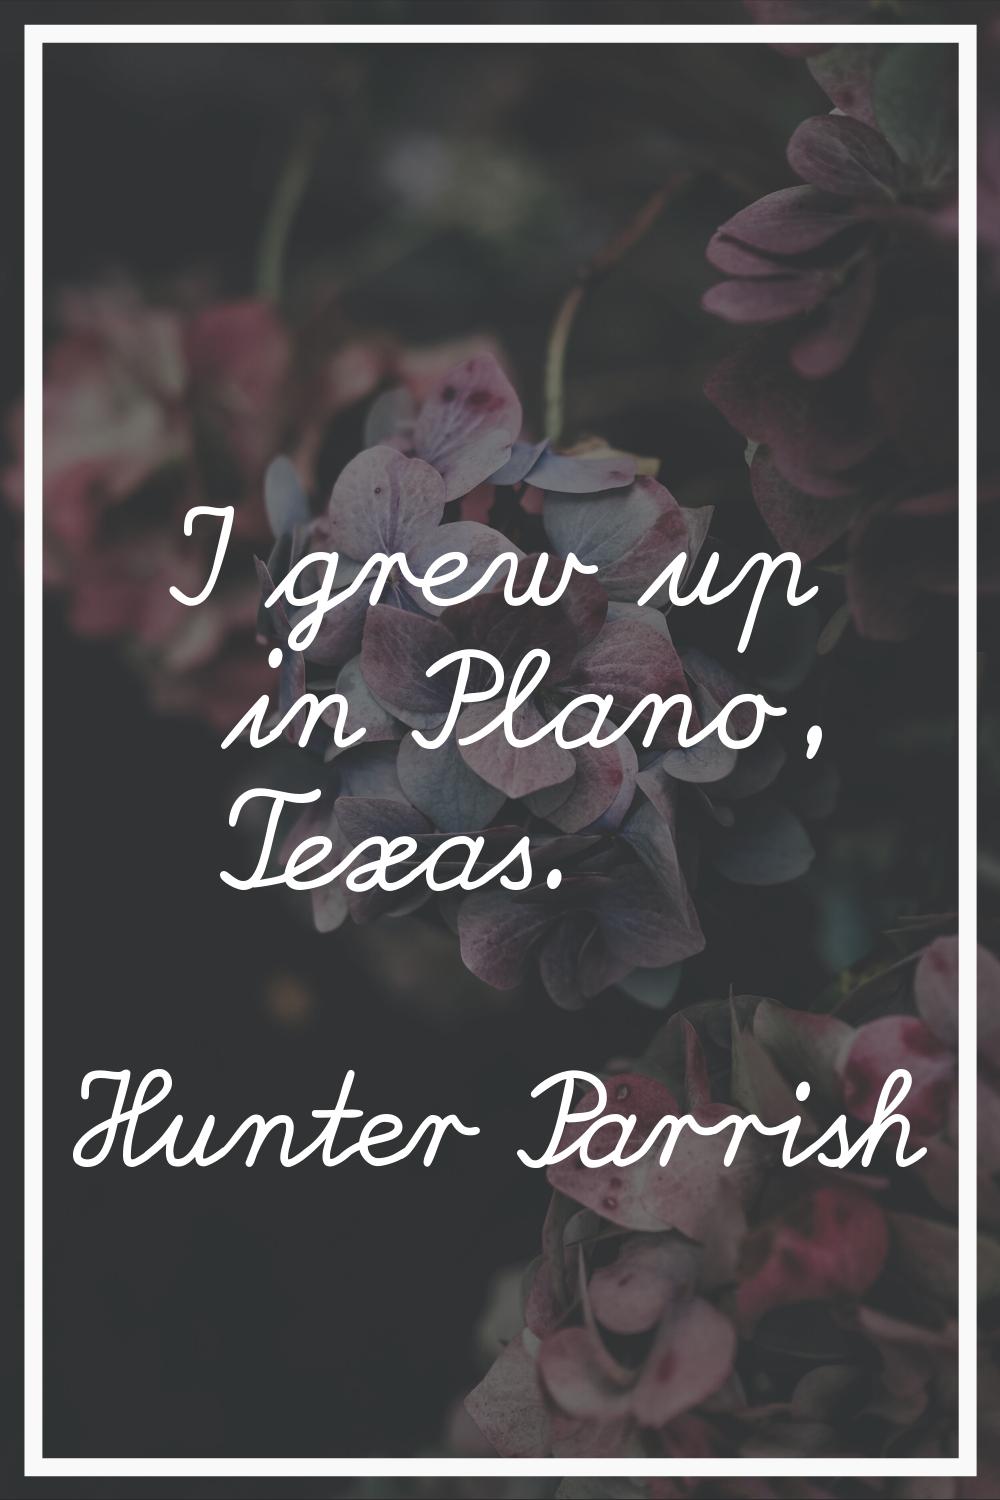 I grew up in Plano, Texas.